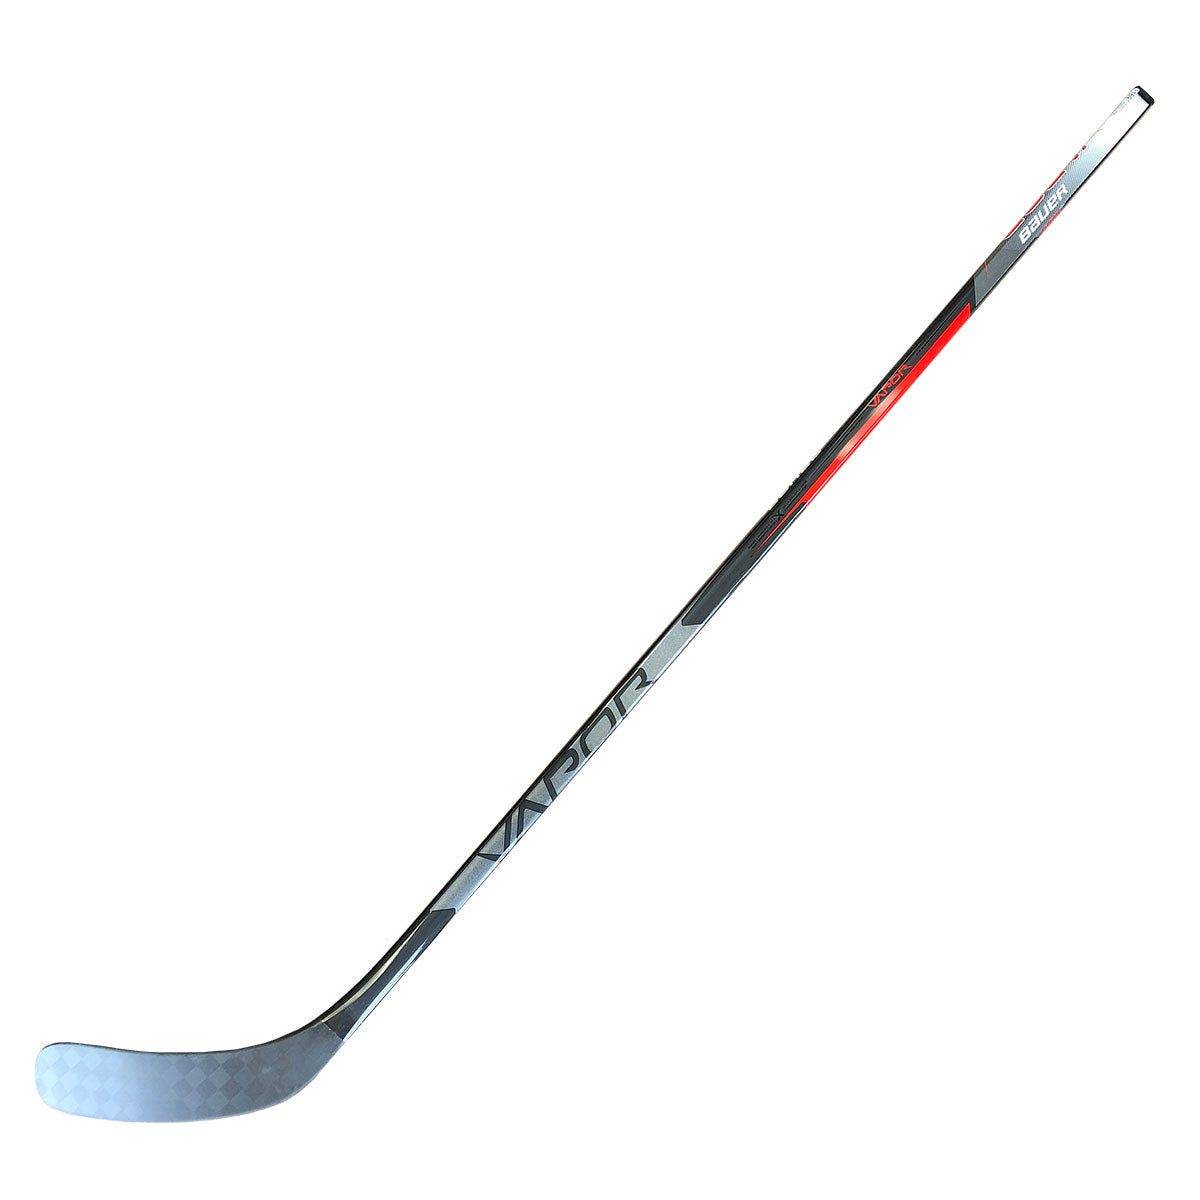 Full backhand view of Bauer S21 Vapor League Ice Hockey Stick (Intermediate)